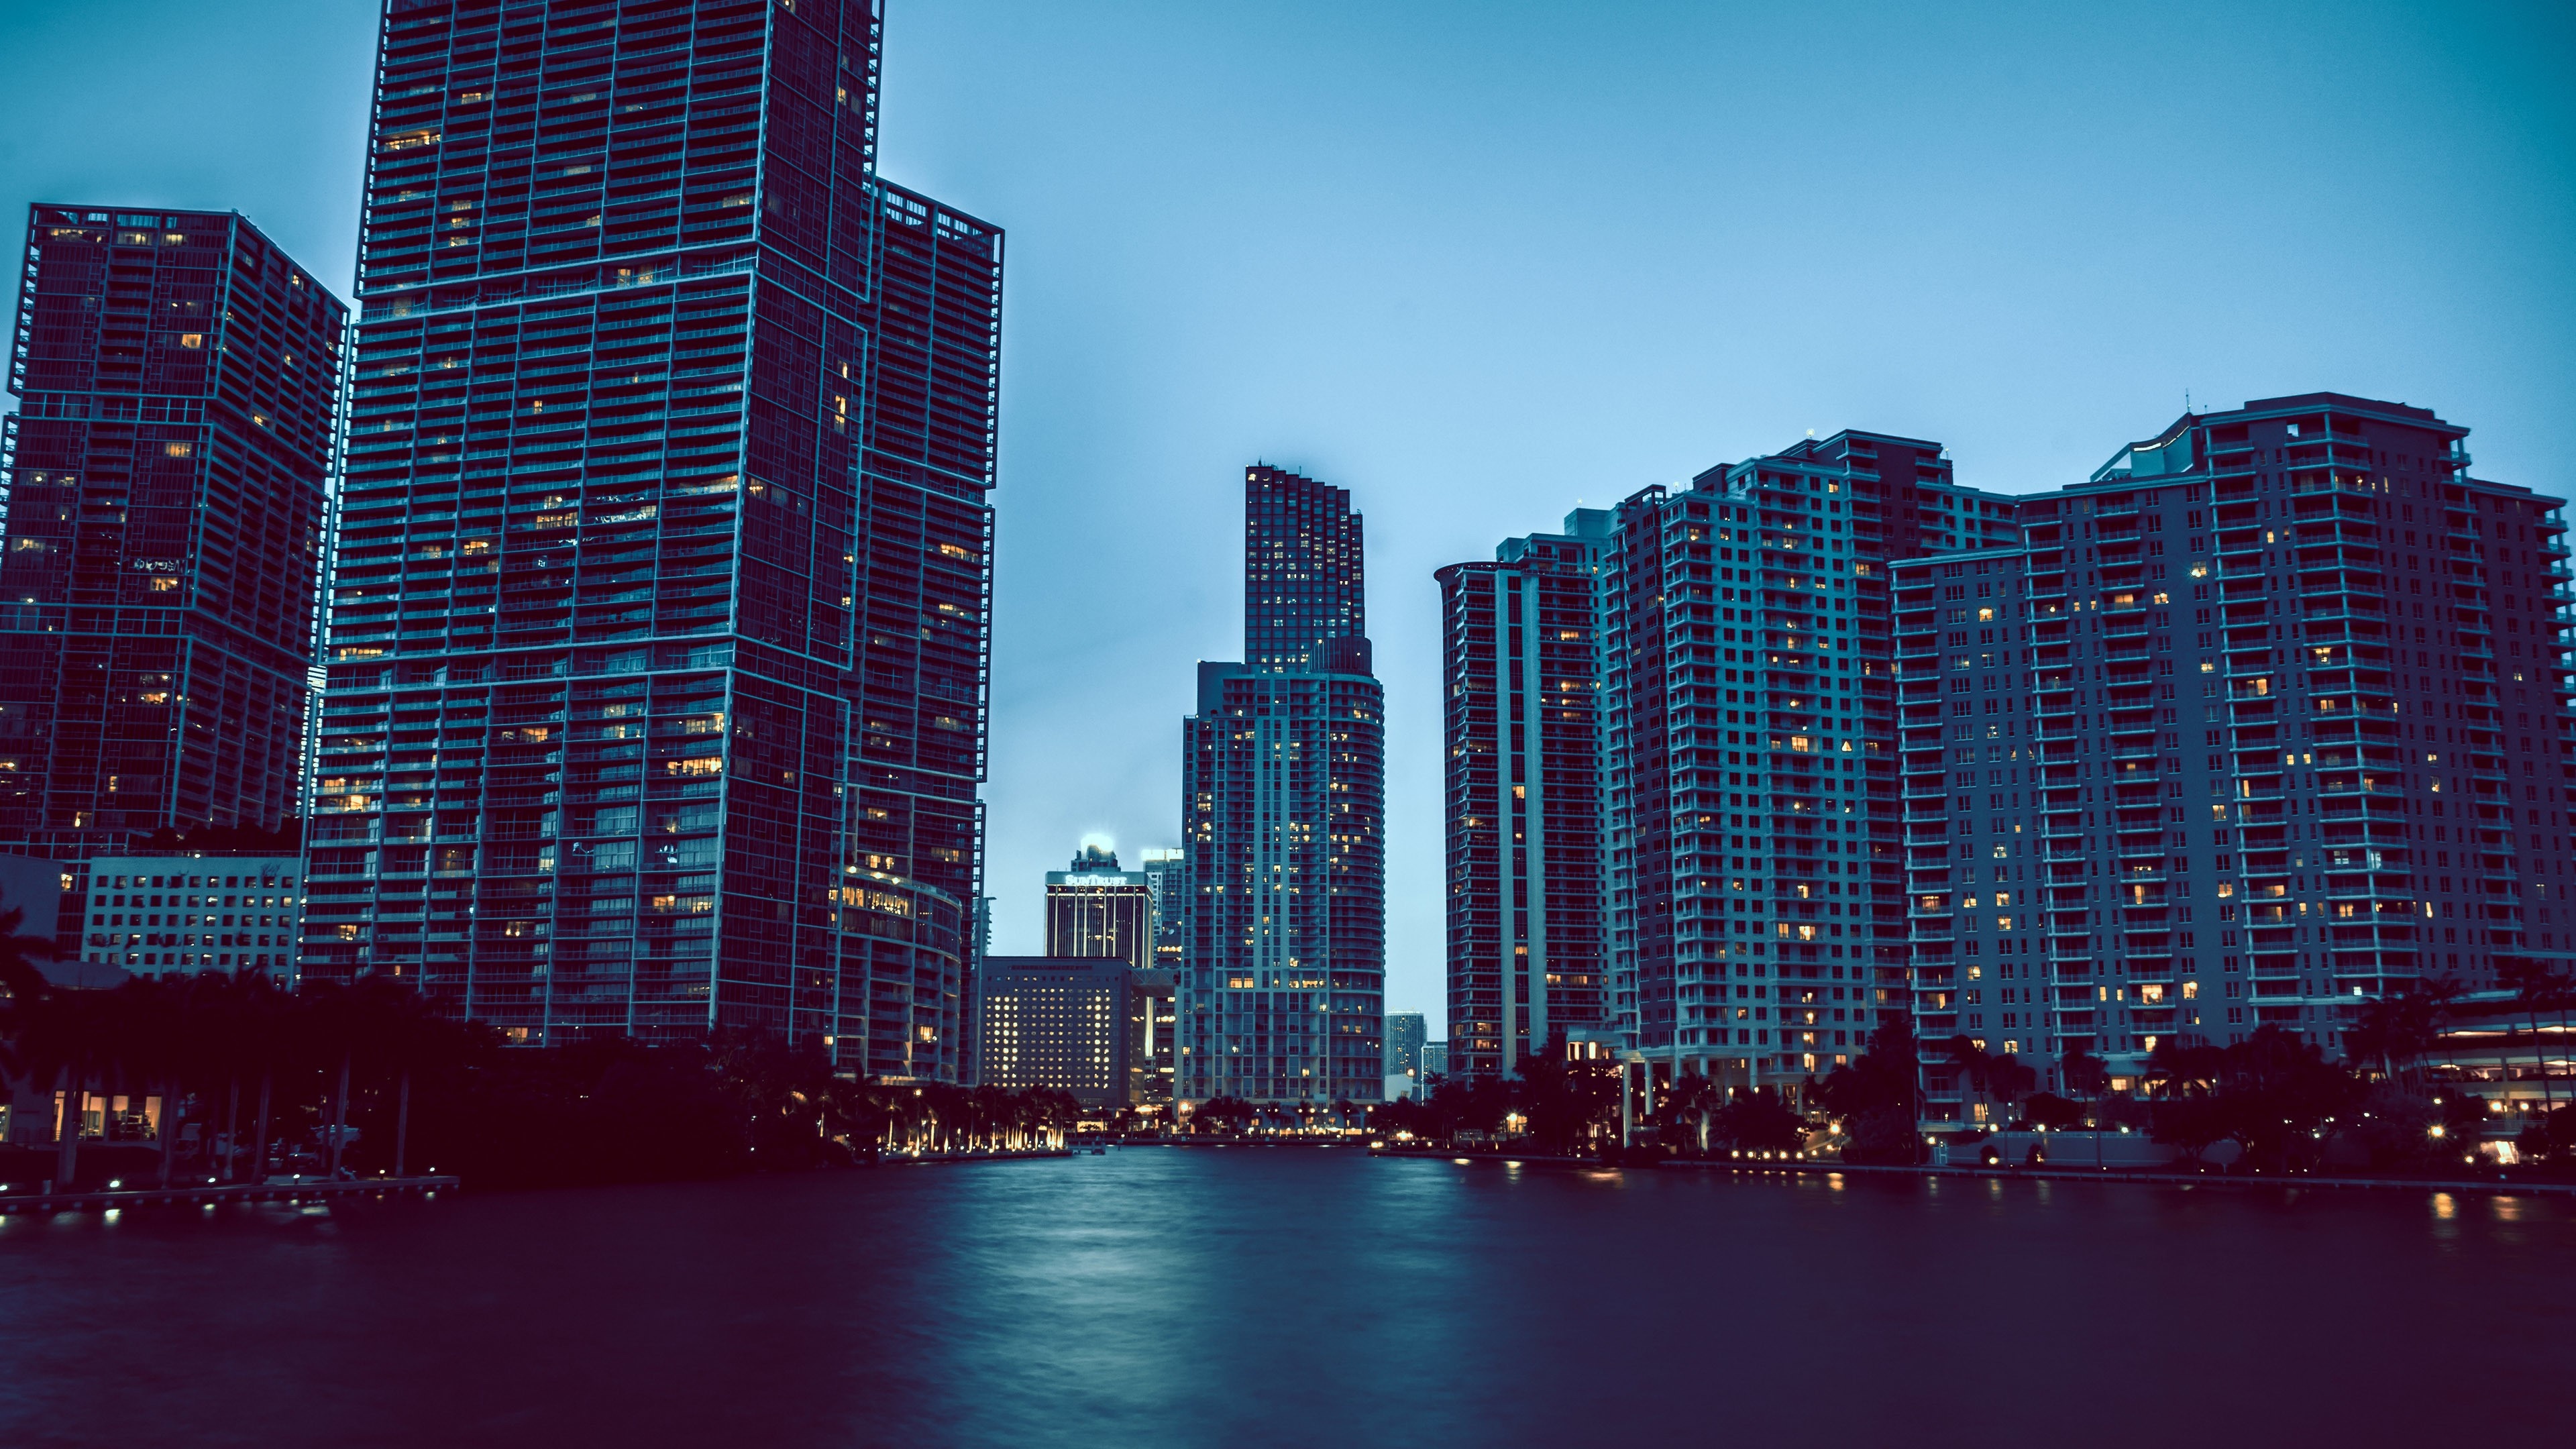 Miami travels, Skyscrapers wallpaper, Night cityscapes, Architectural beauty, 3840x2160 4K Desktop